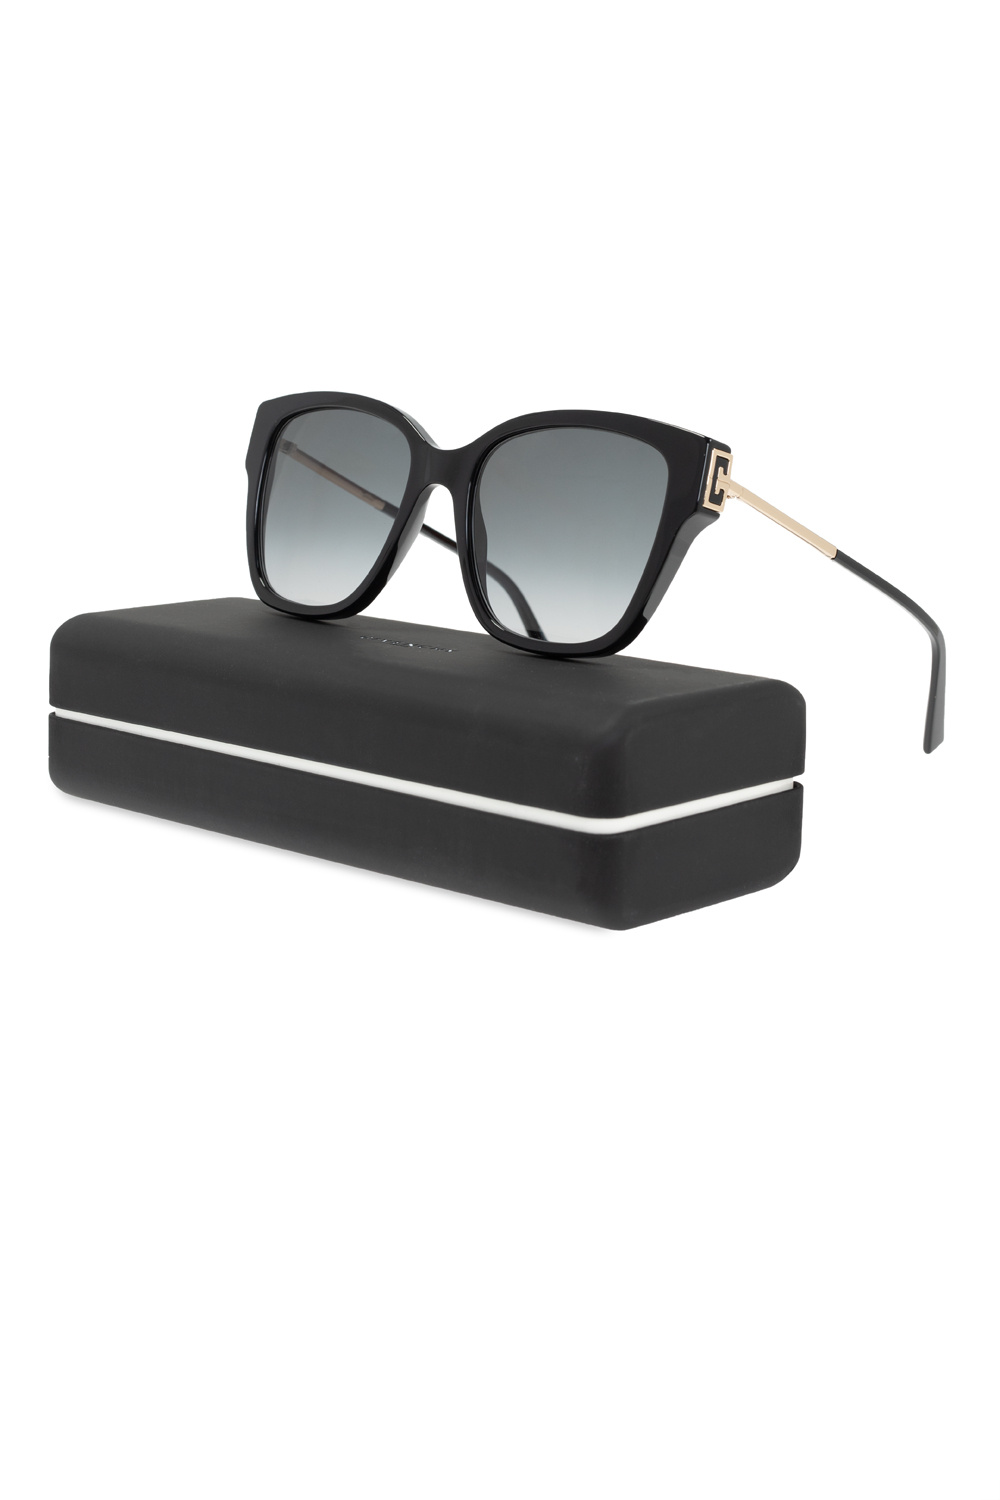 Givenchy Bottega Veneta Eyewear angular square-frame sunglasses